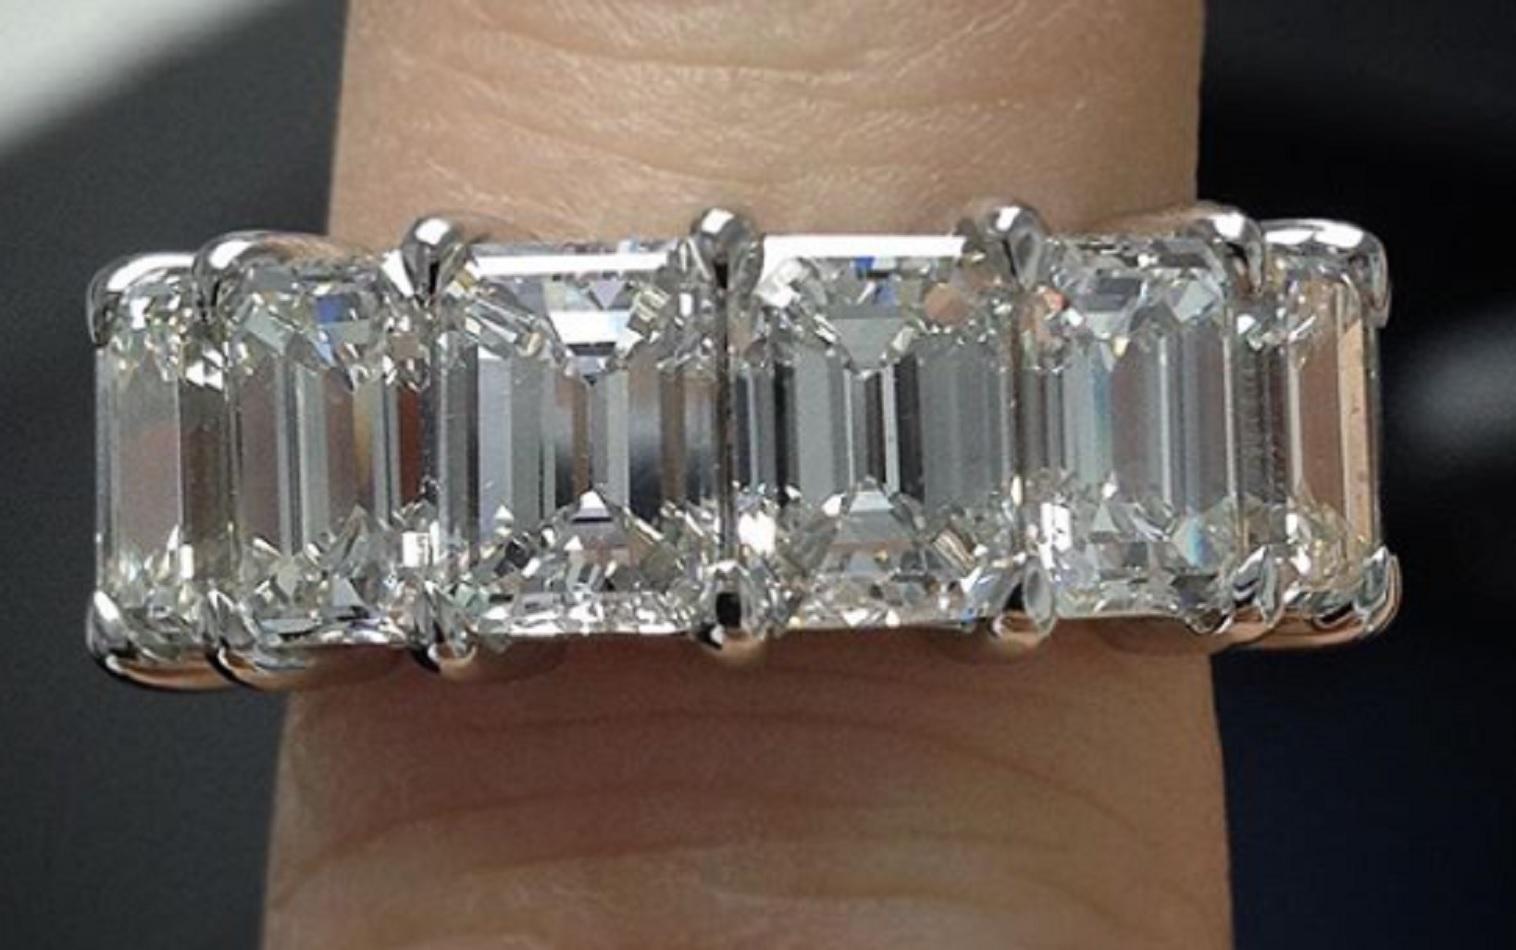 emerald cut diamond eternity ring